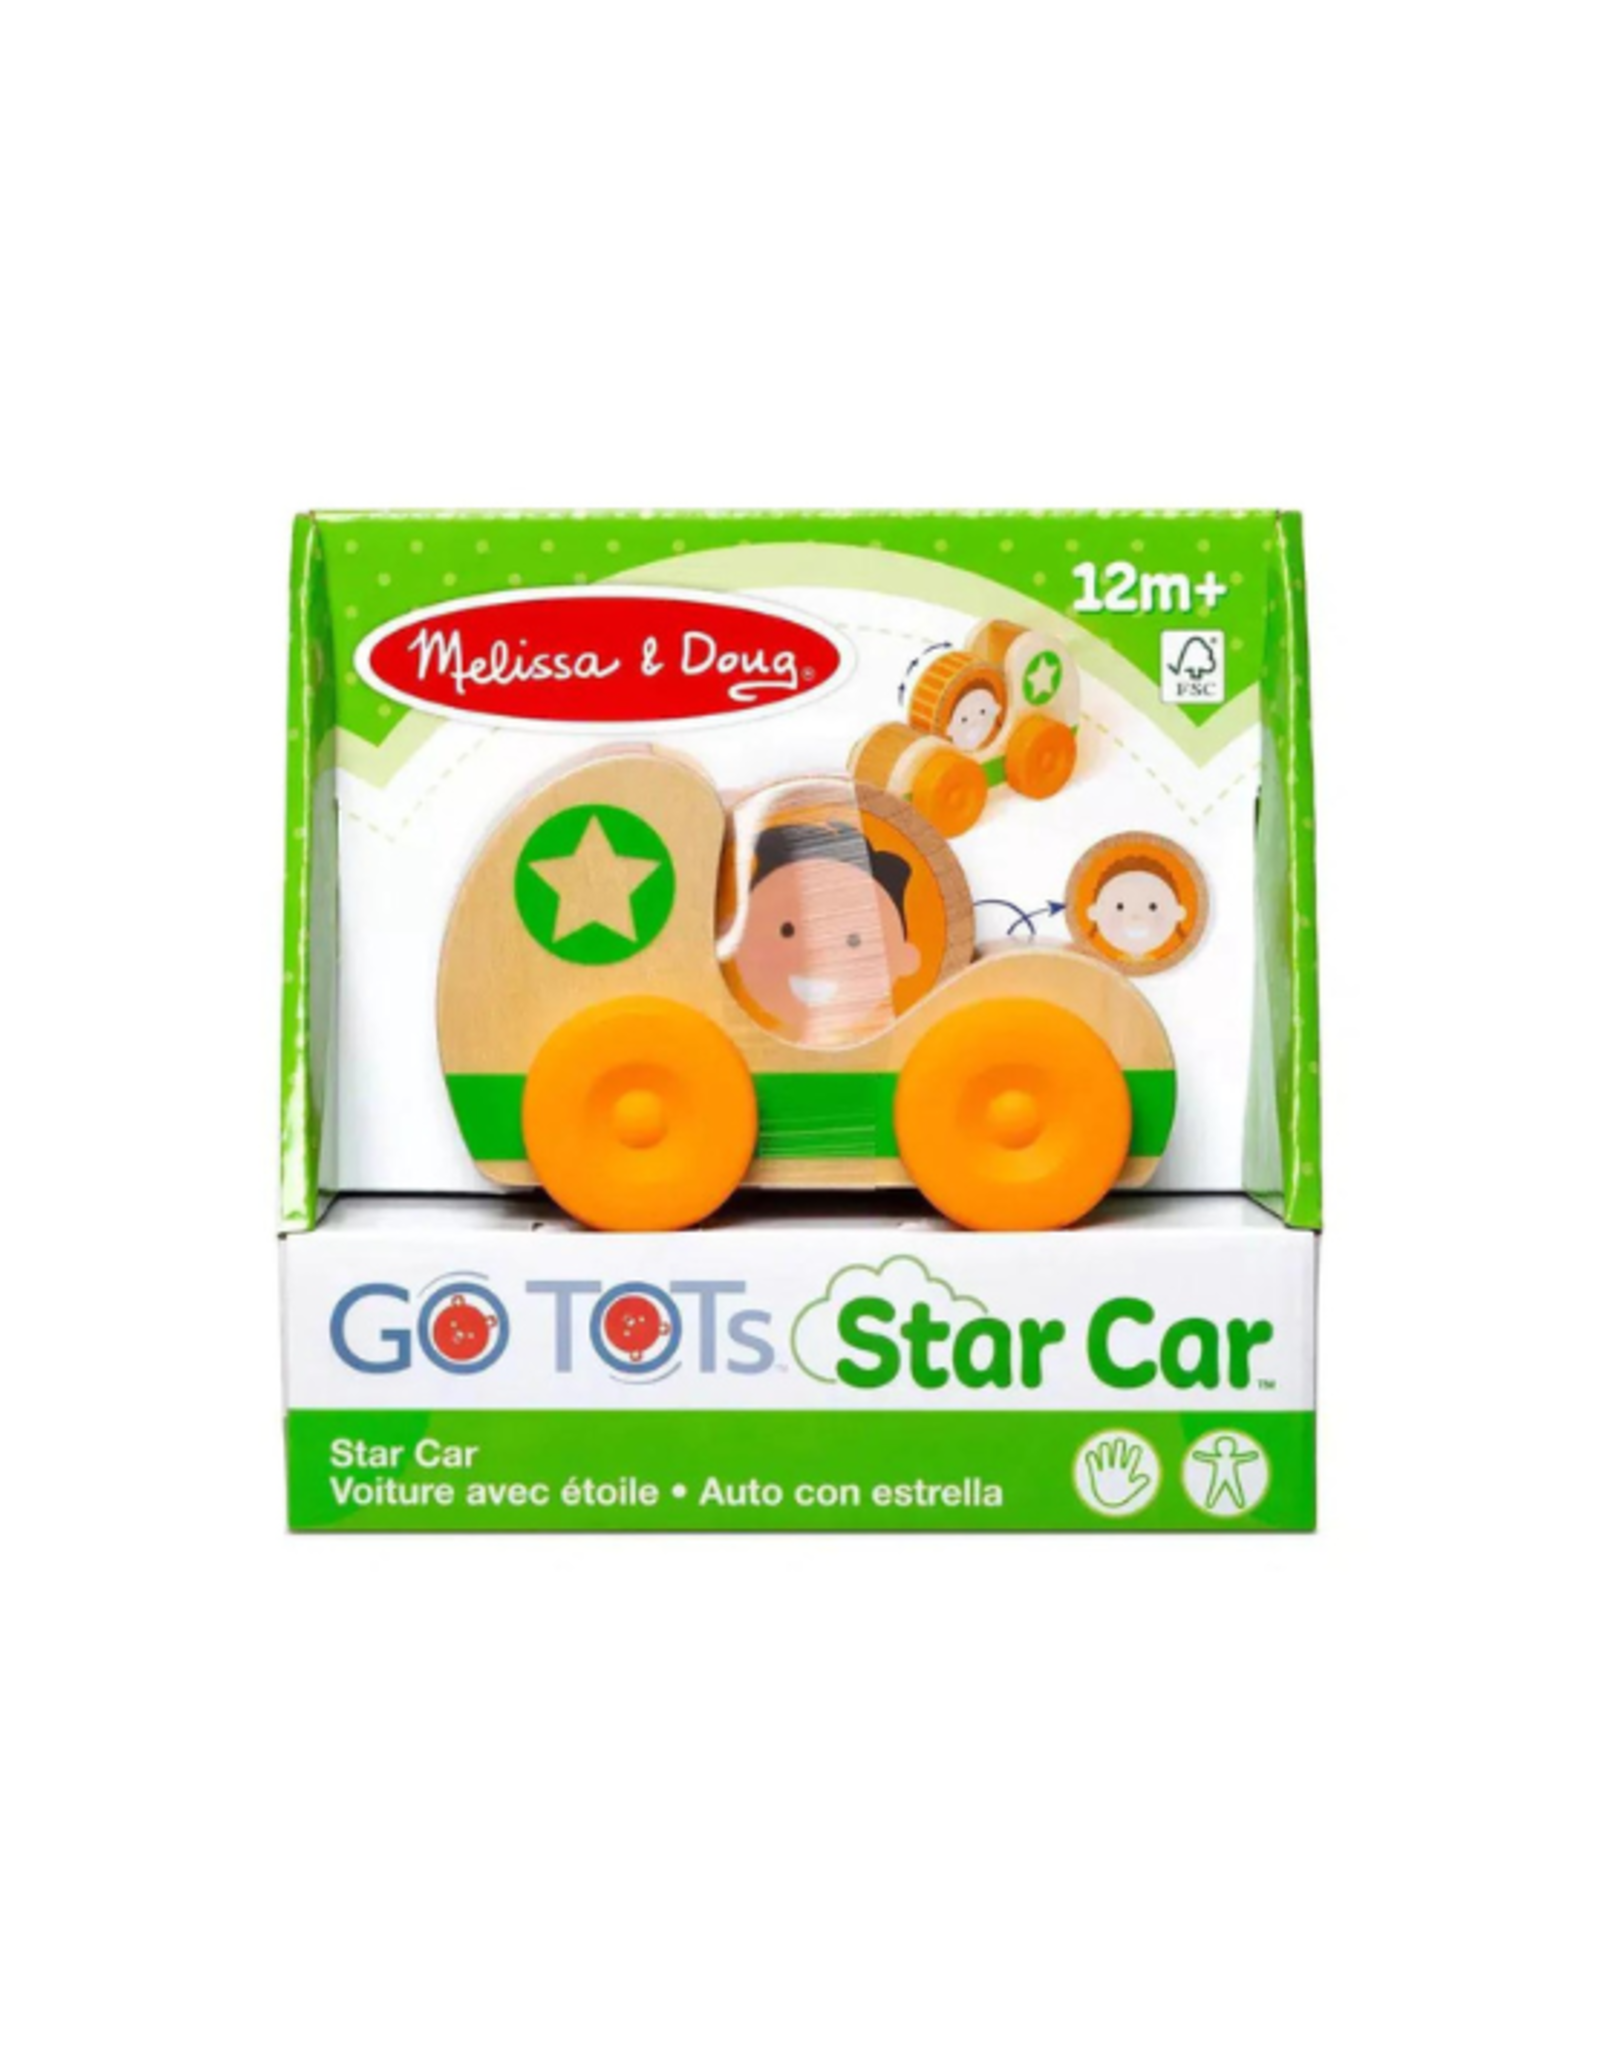 Melissa & Doug Melissa & Doug - Go Tots Star Car (Orange)